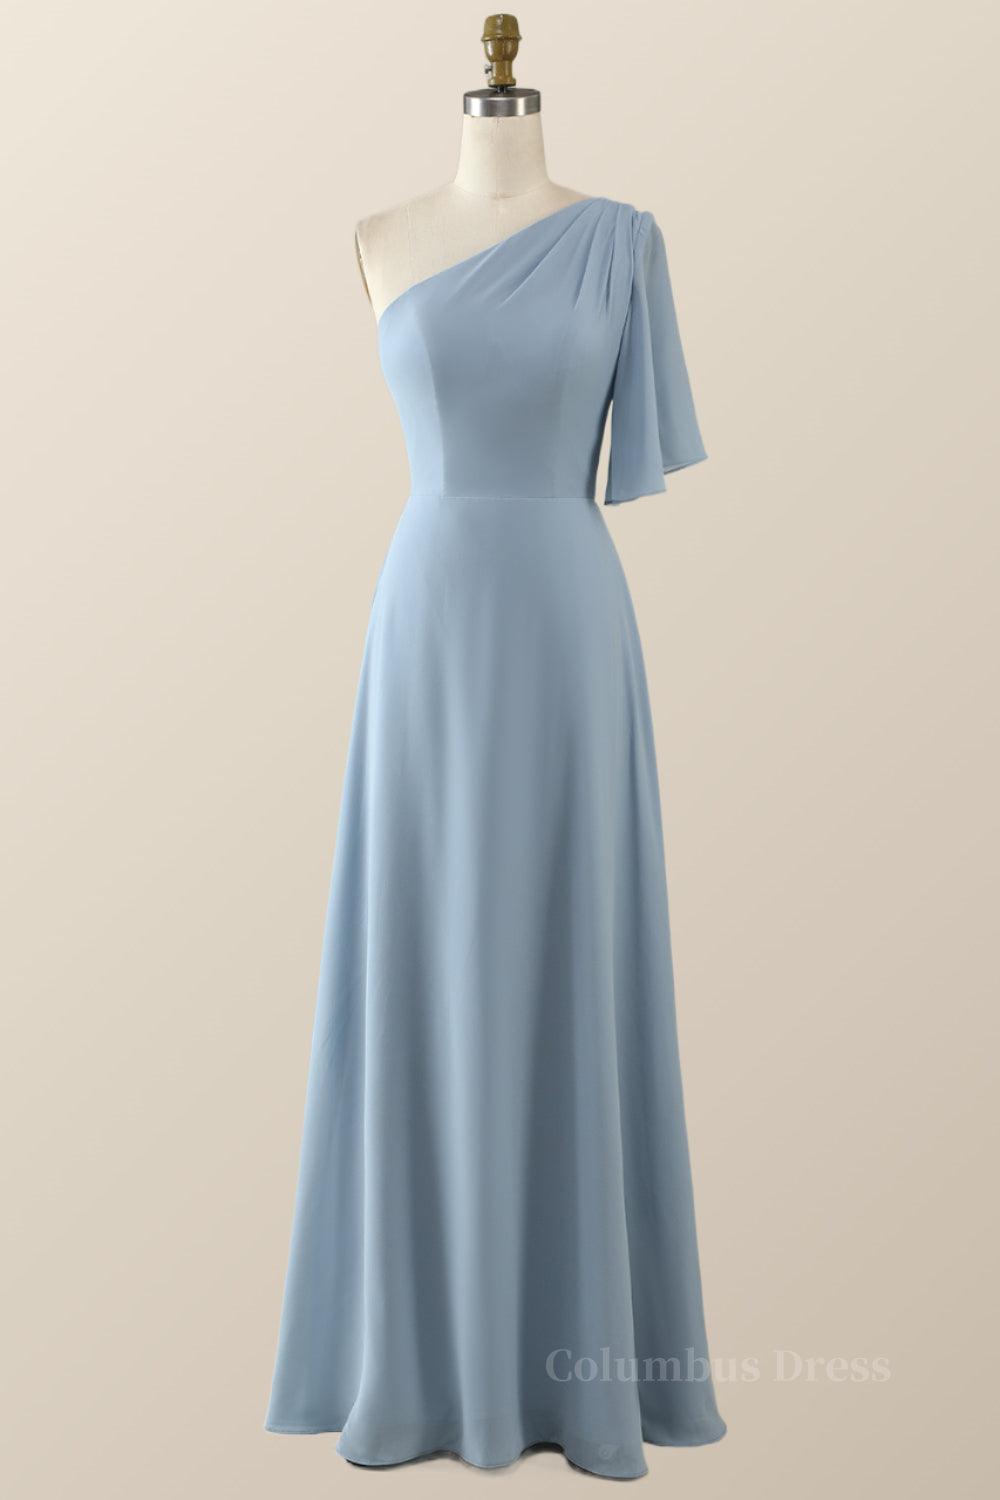 One Shoulder Blue Chiffon Long Corset Bridesmaid Dress outfit, Bridesmaid Dress Under 105